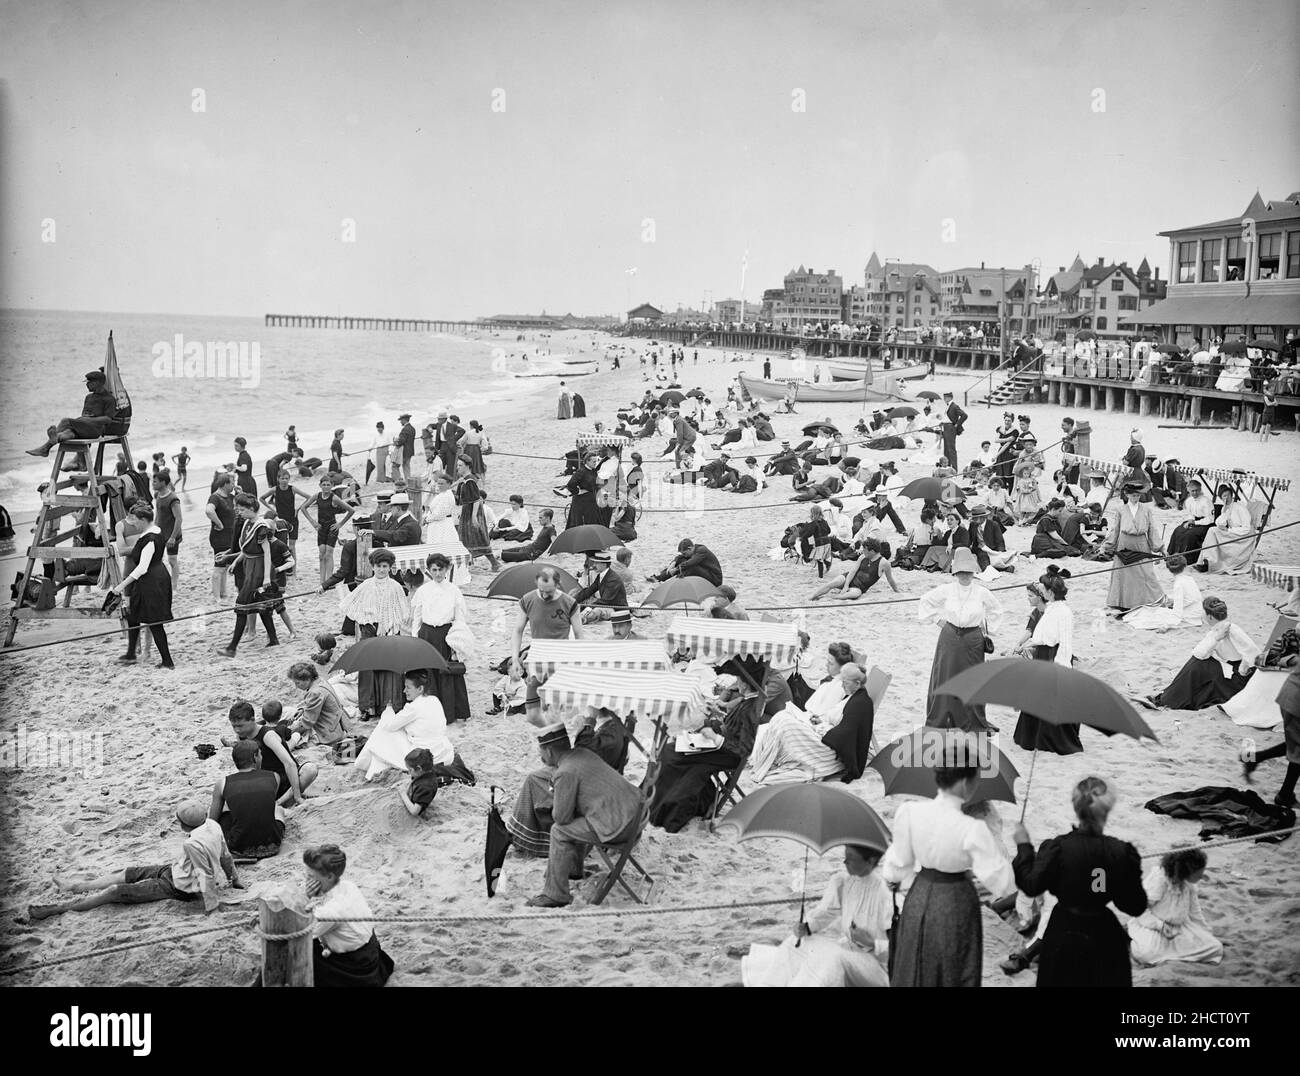 On the beach at Ross' pavilion, Ocean Grove, NJ, 1905 Stock Photo